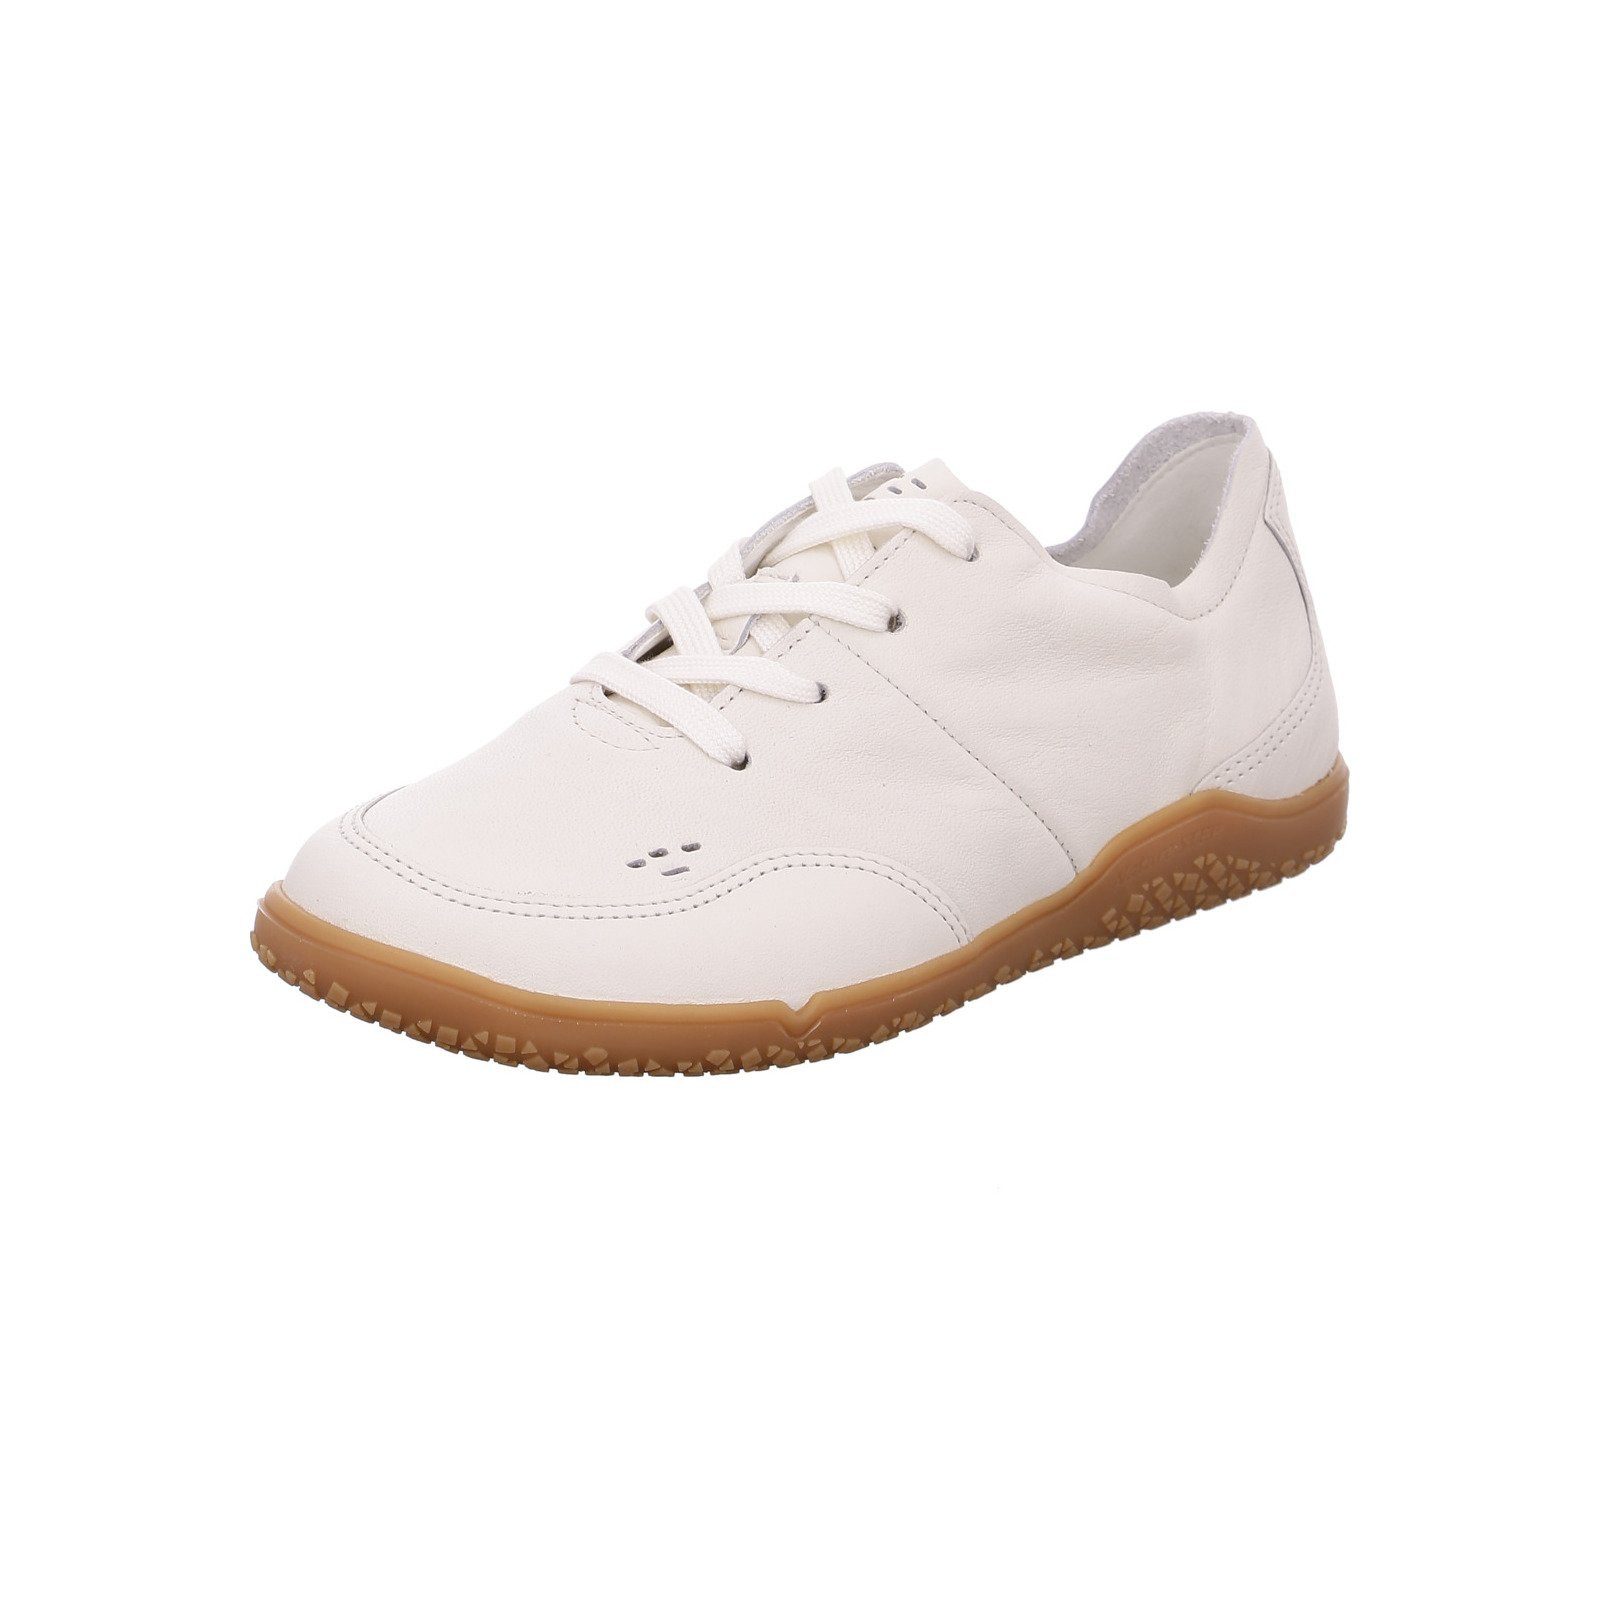 Ara Nature - Damen Schuhe Schnürschuh Sneaker Glattleder weiß